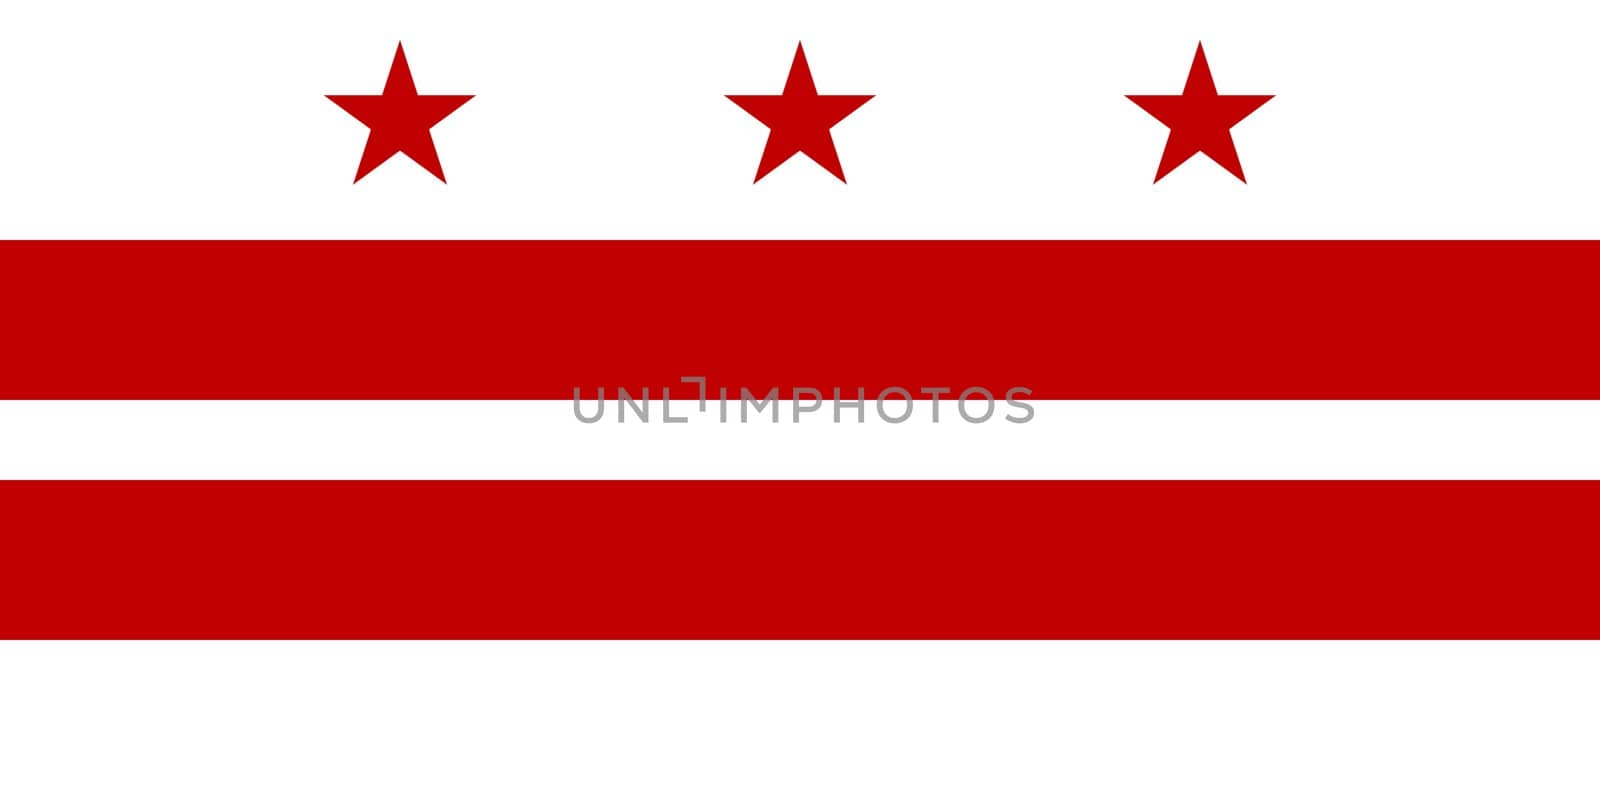 City flag of Washington D.C, U.S.A.